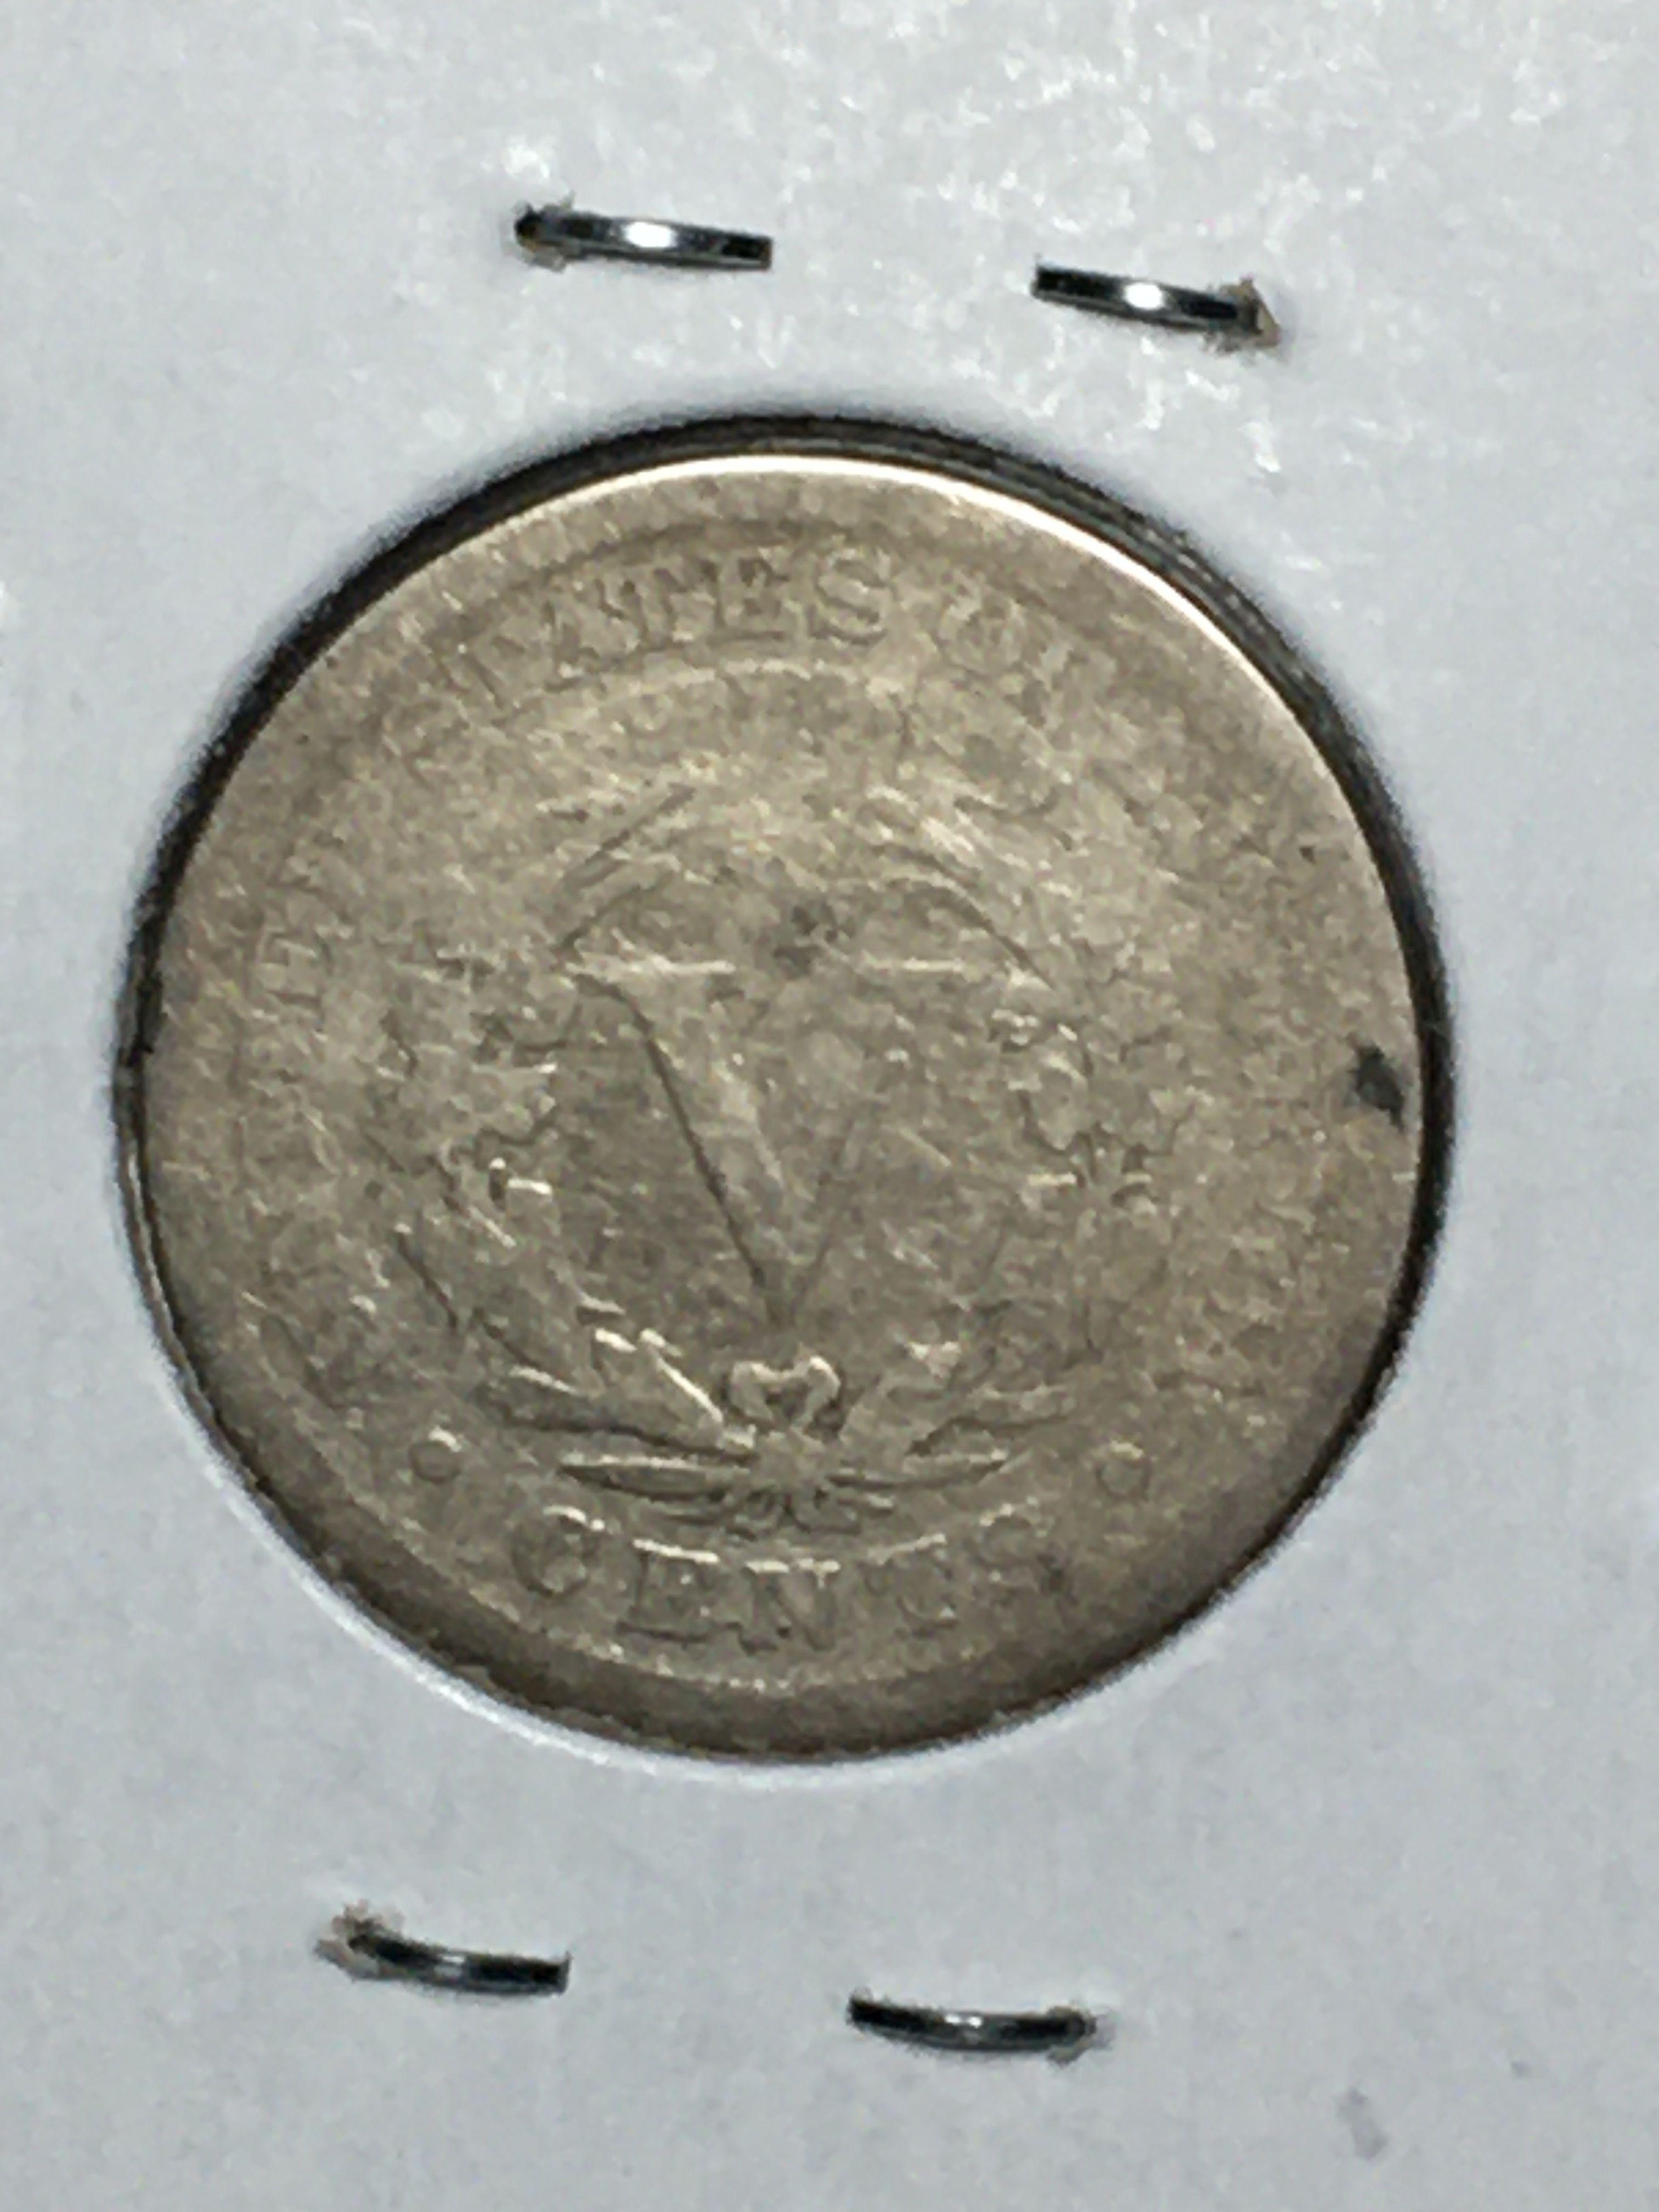 1864 Shield Nickel